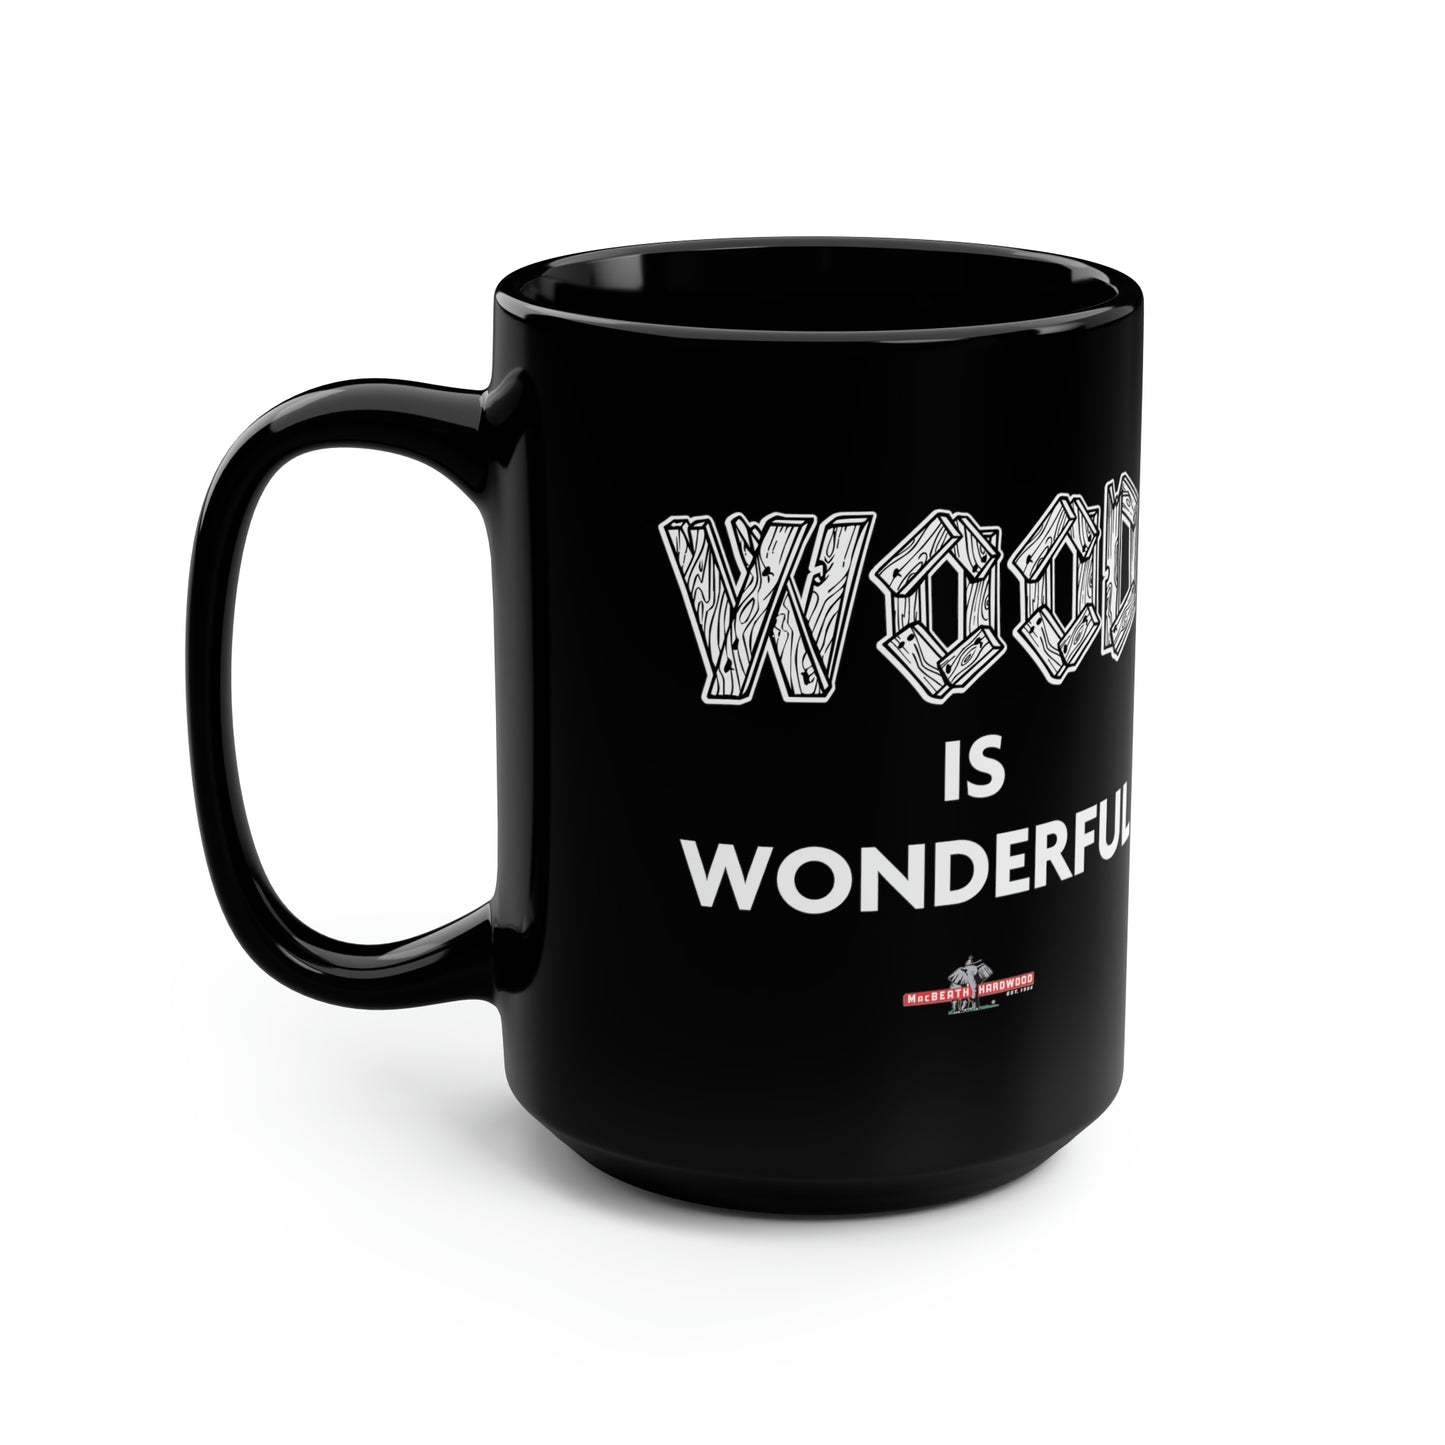 Wood is Wonderful Coffee Mug, 15oz